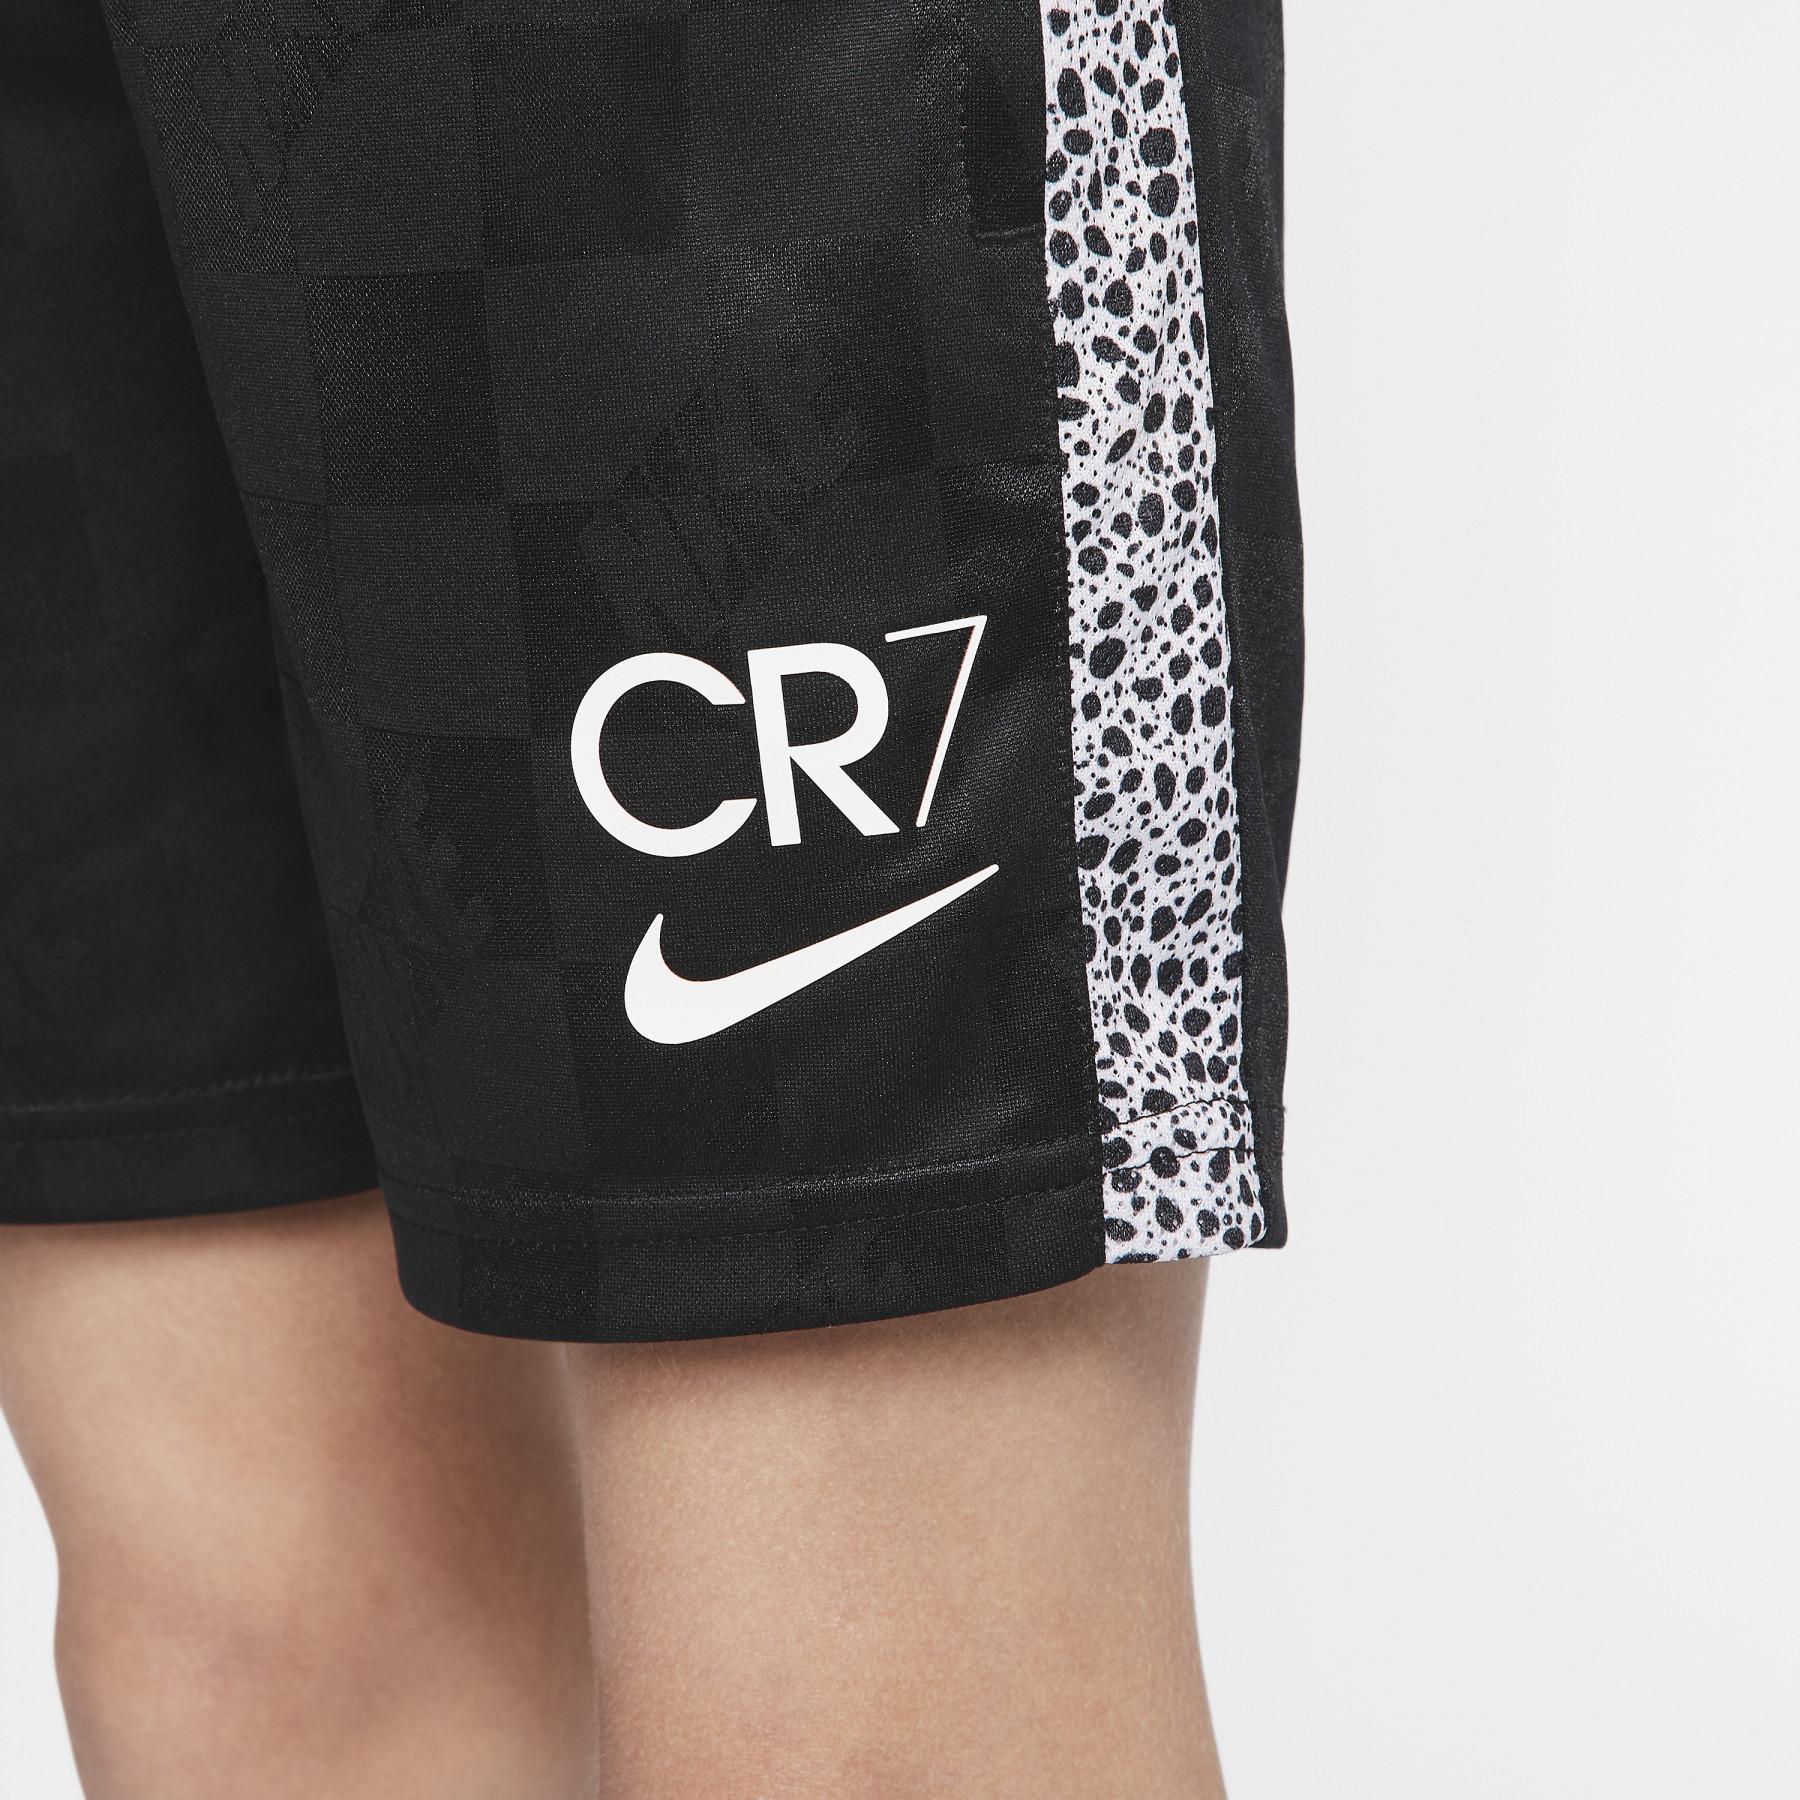 Kinder shorts Nike Dri-FIT CR7